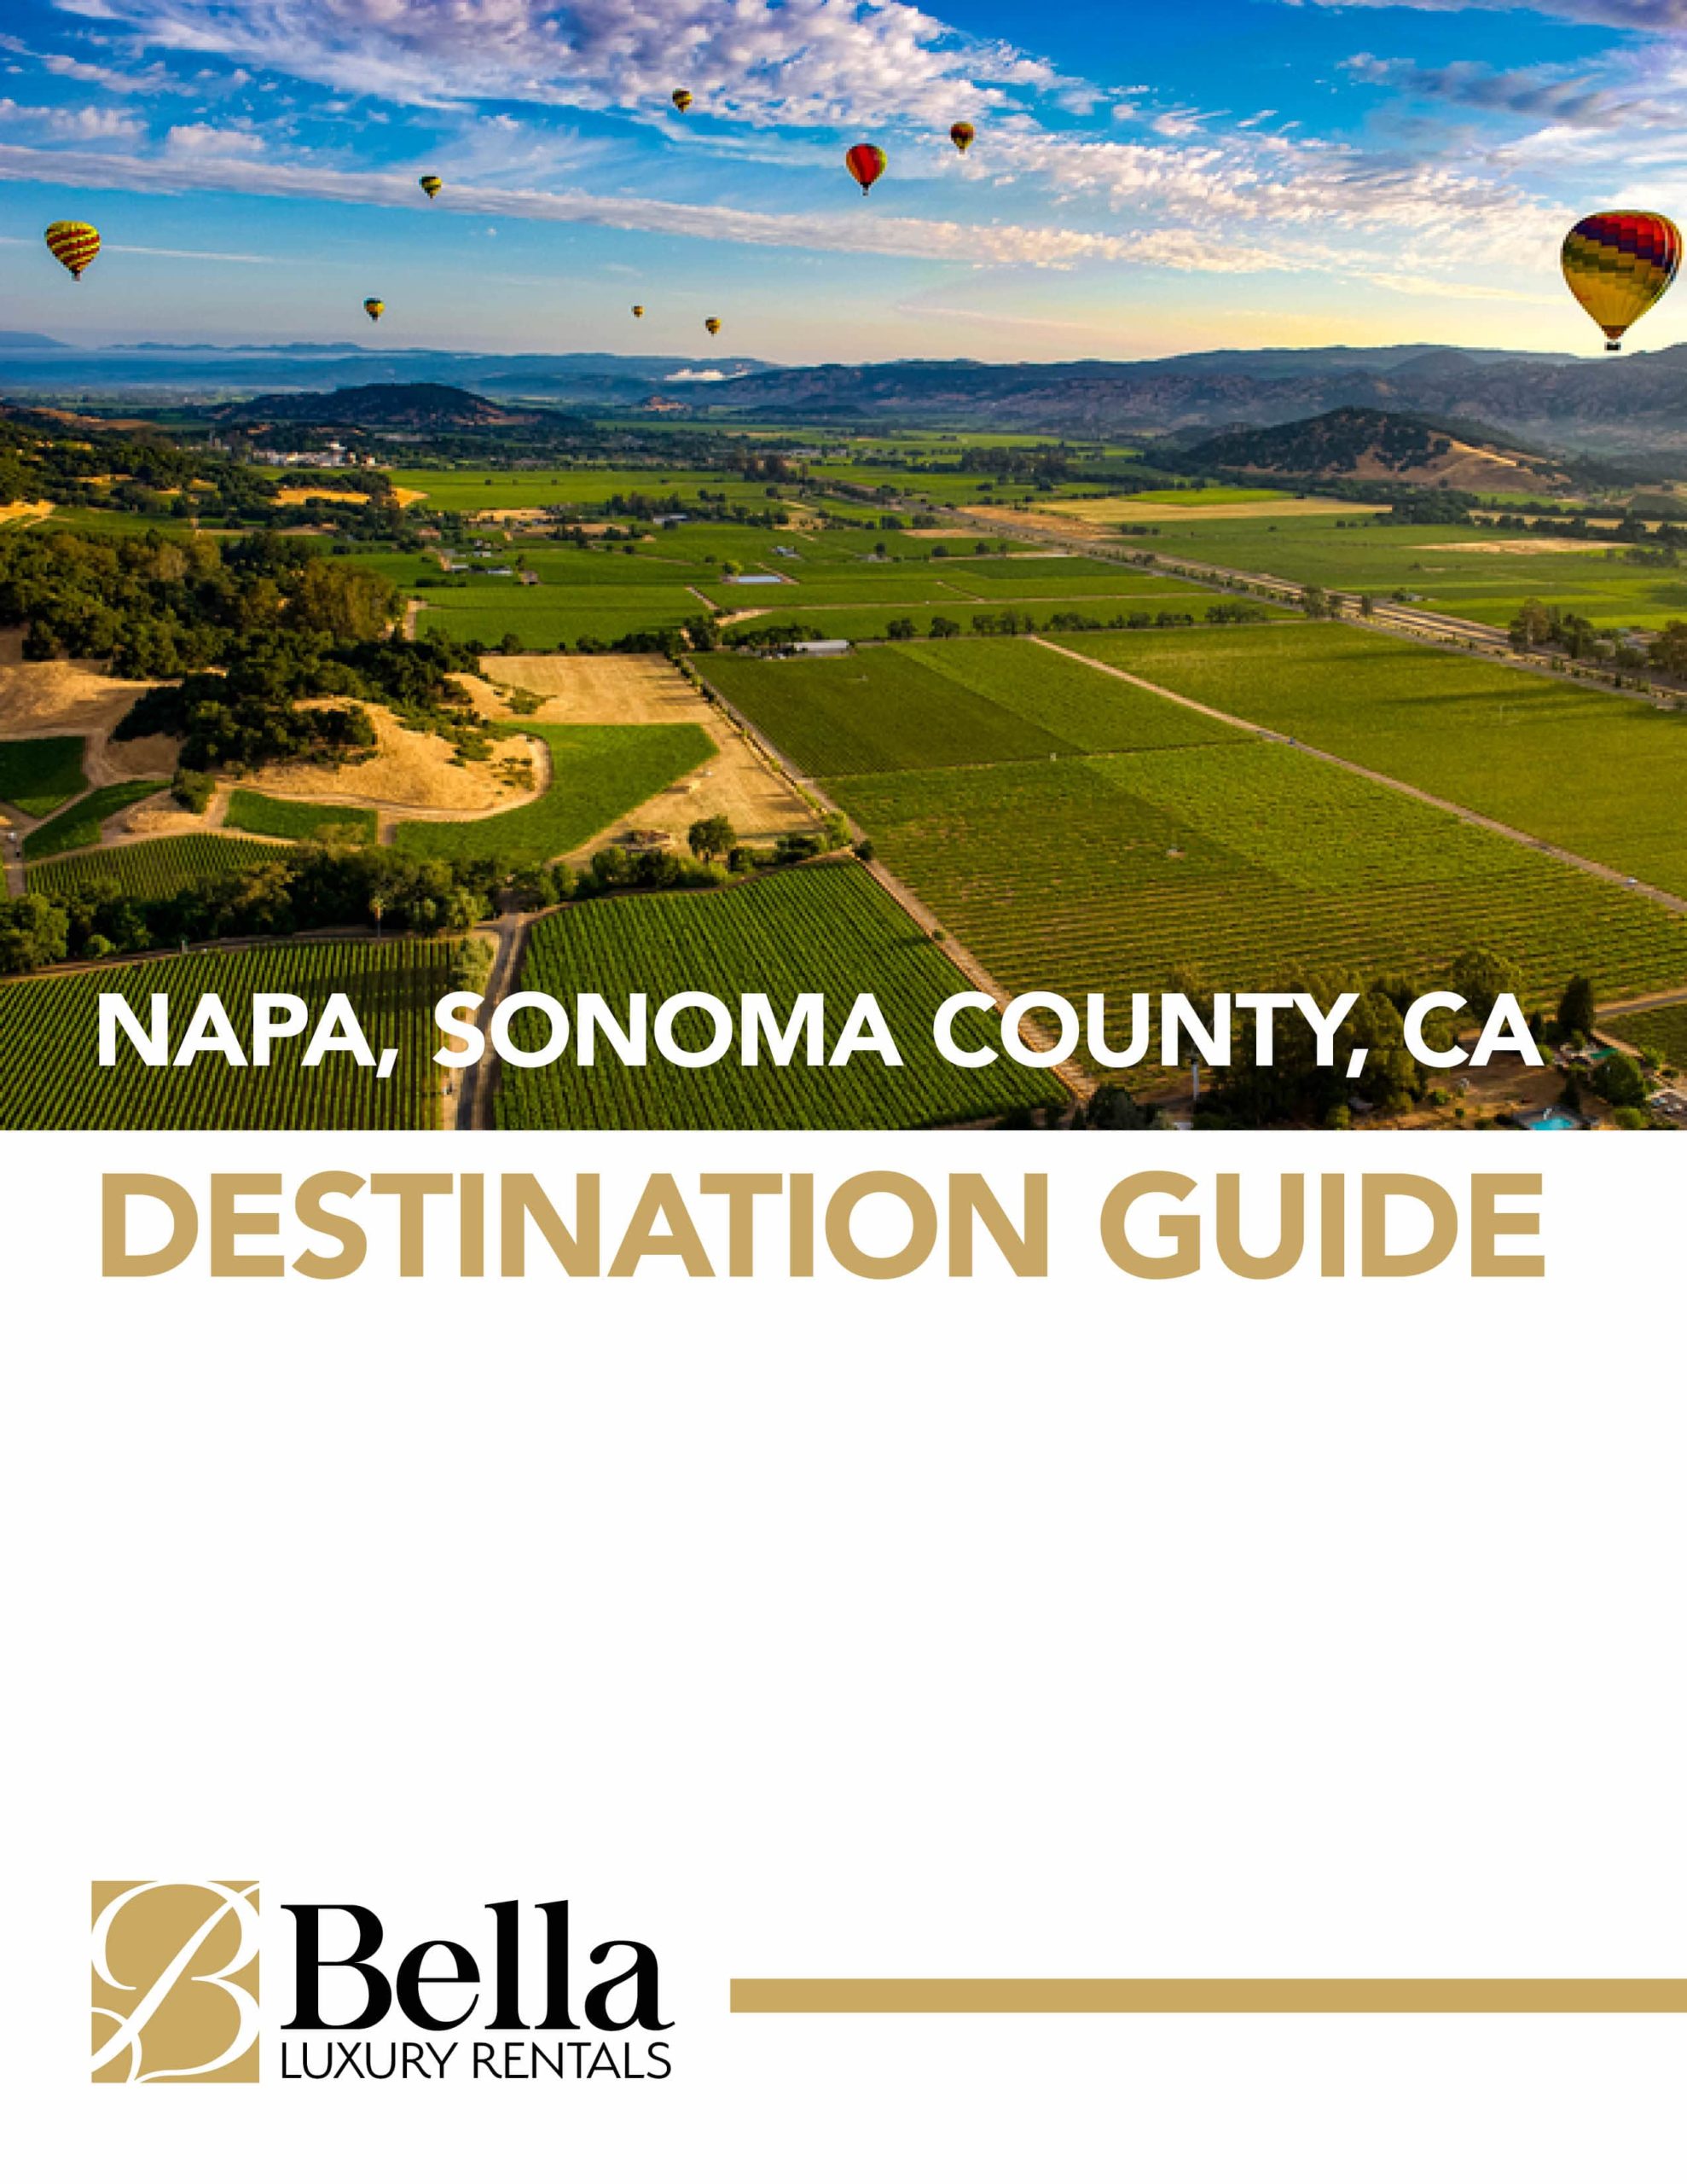 Bella Luxury Rentals - Napa Sonoma Destination Guide